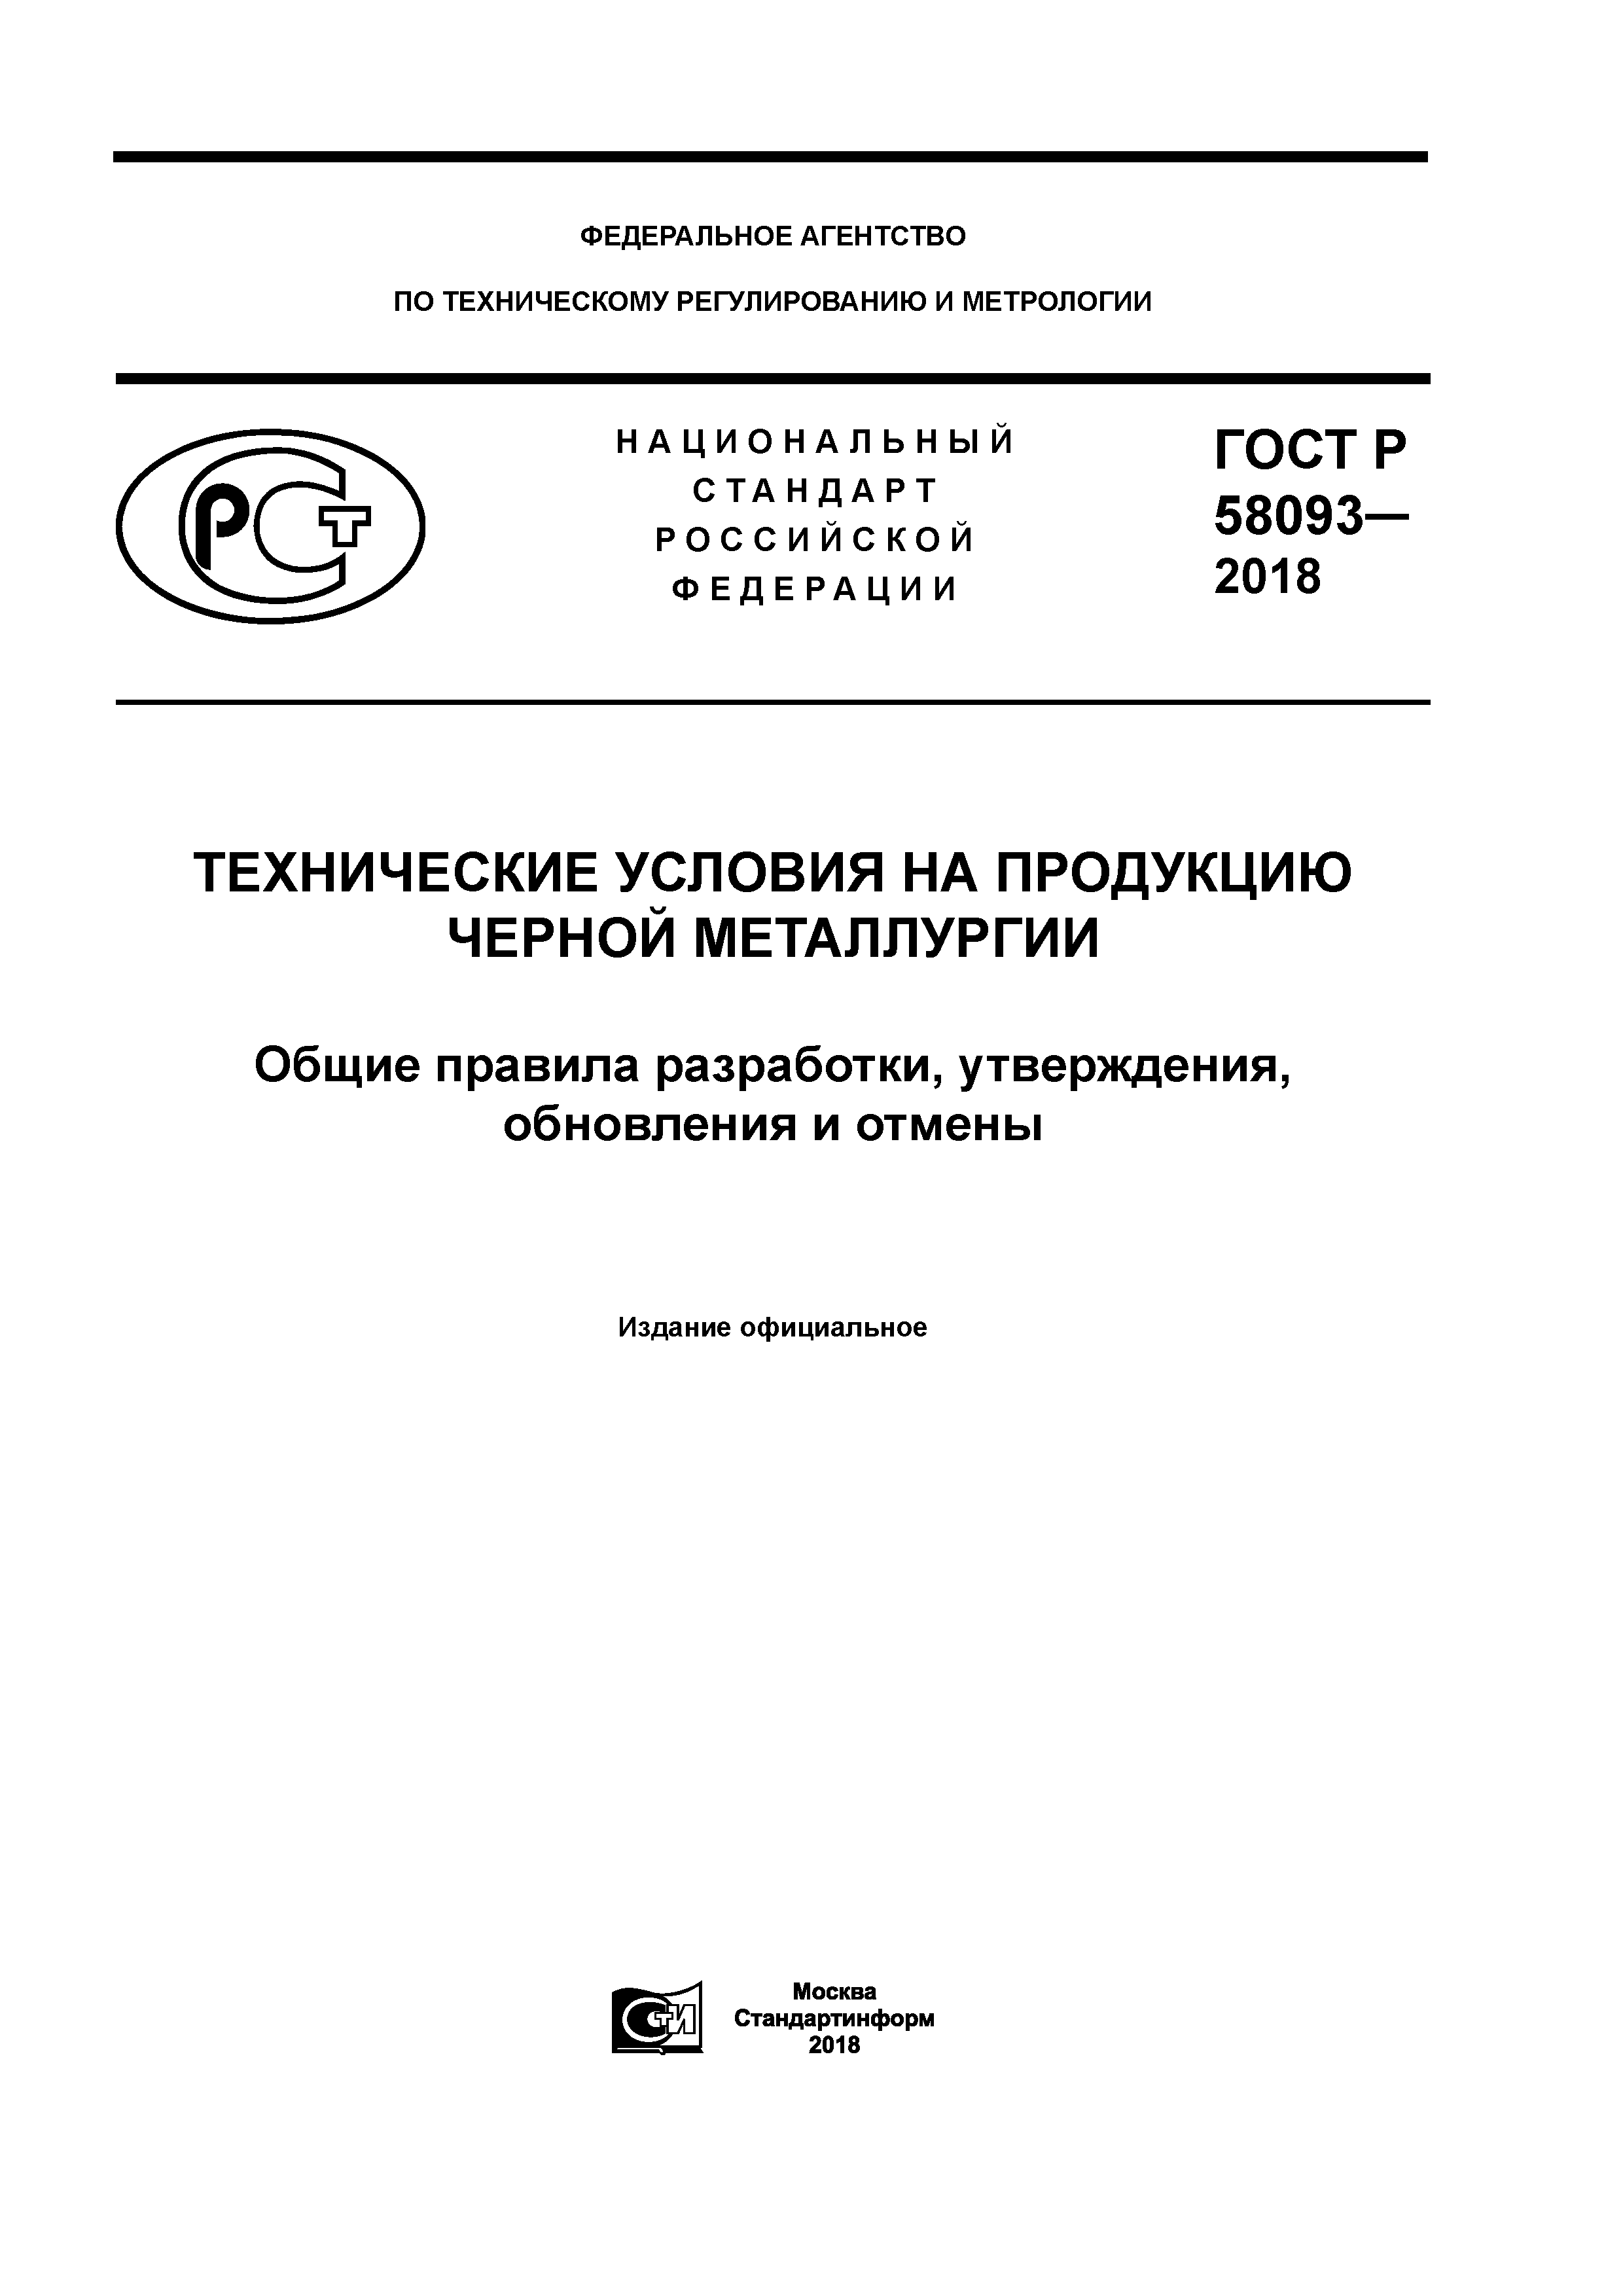 ГОСТ Р 58093-2018